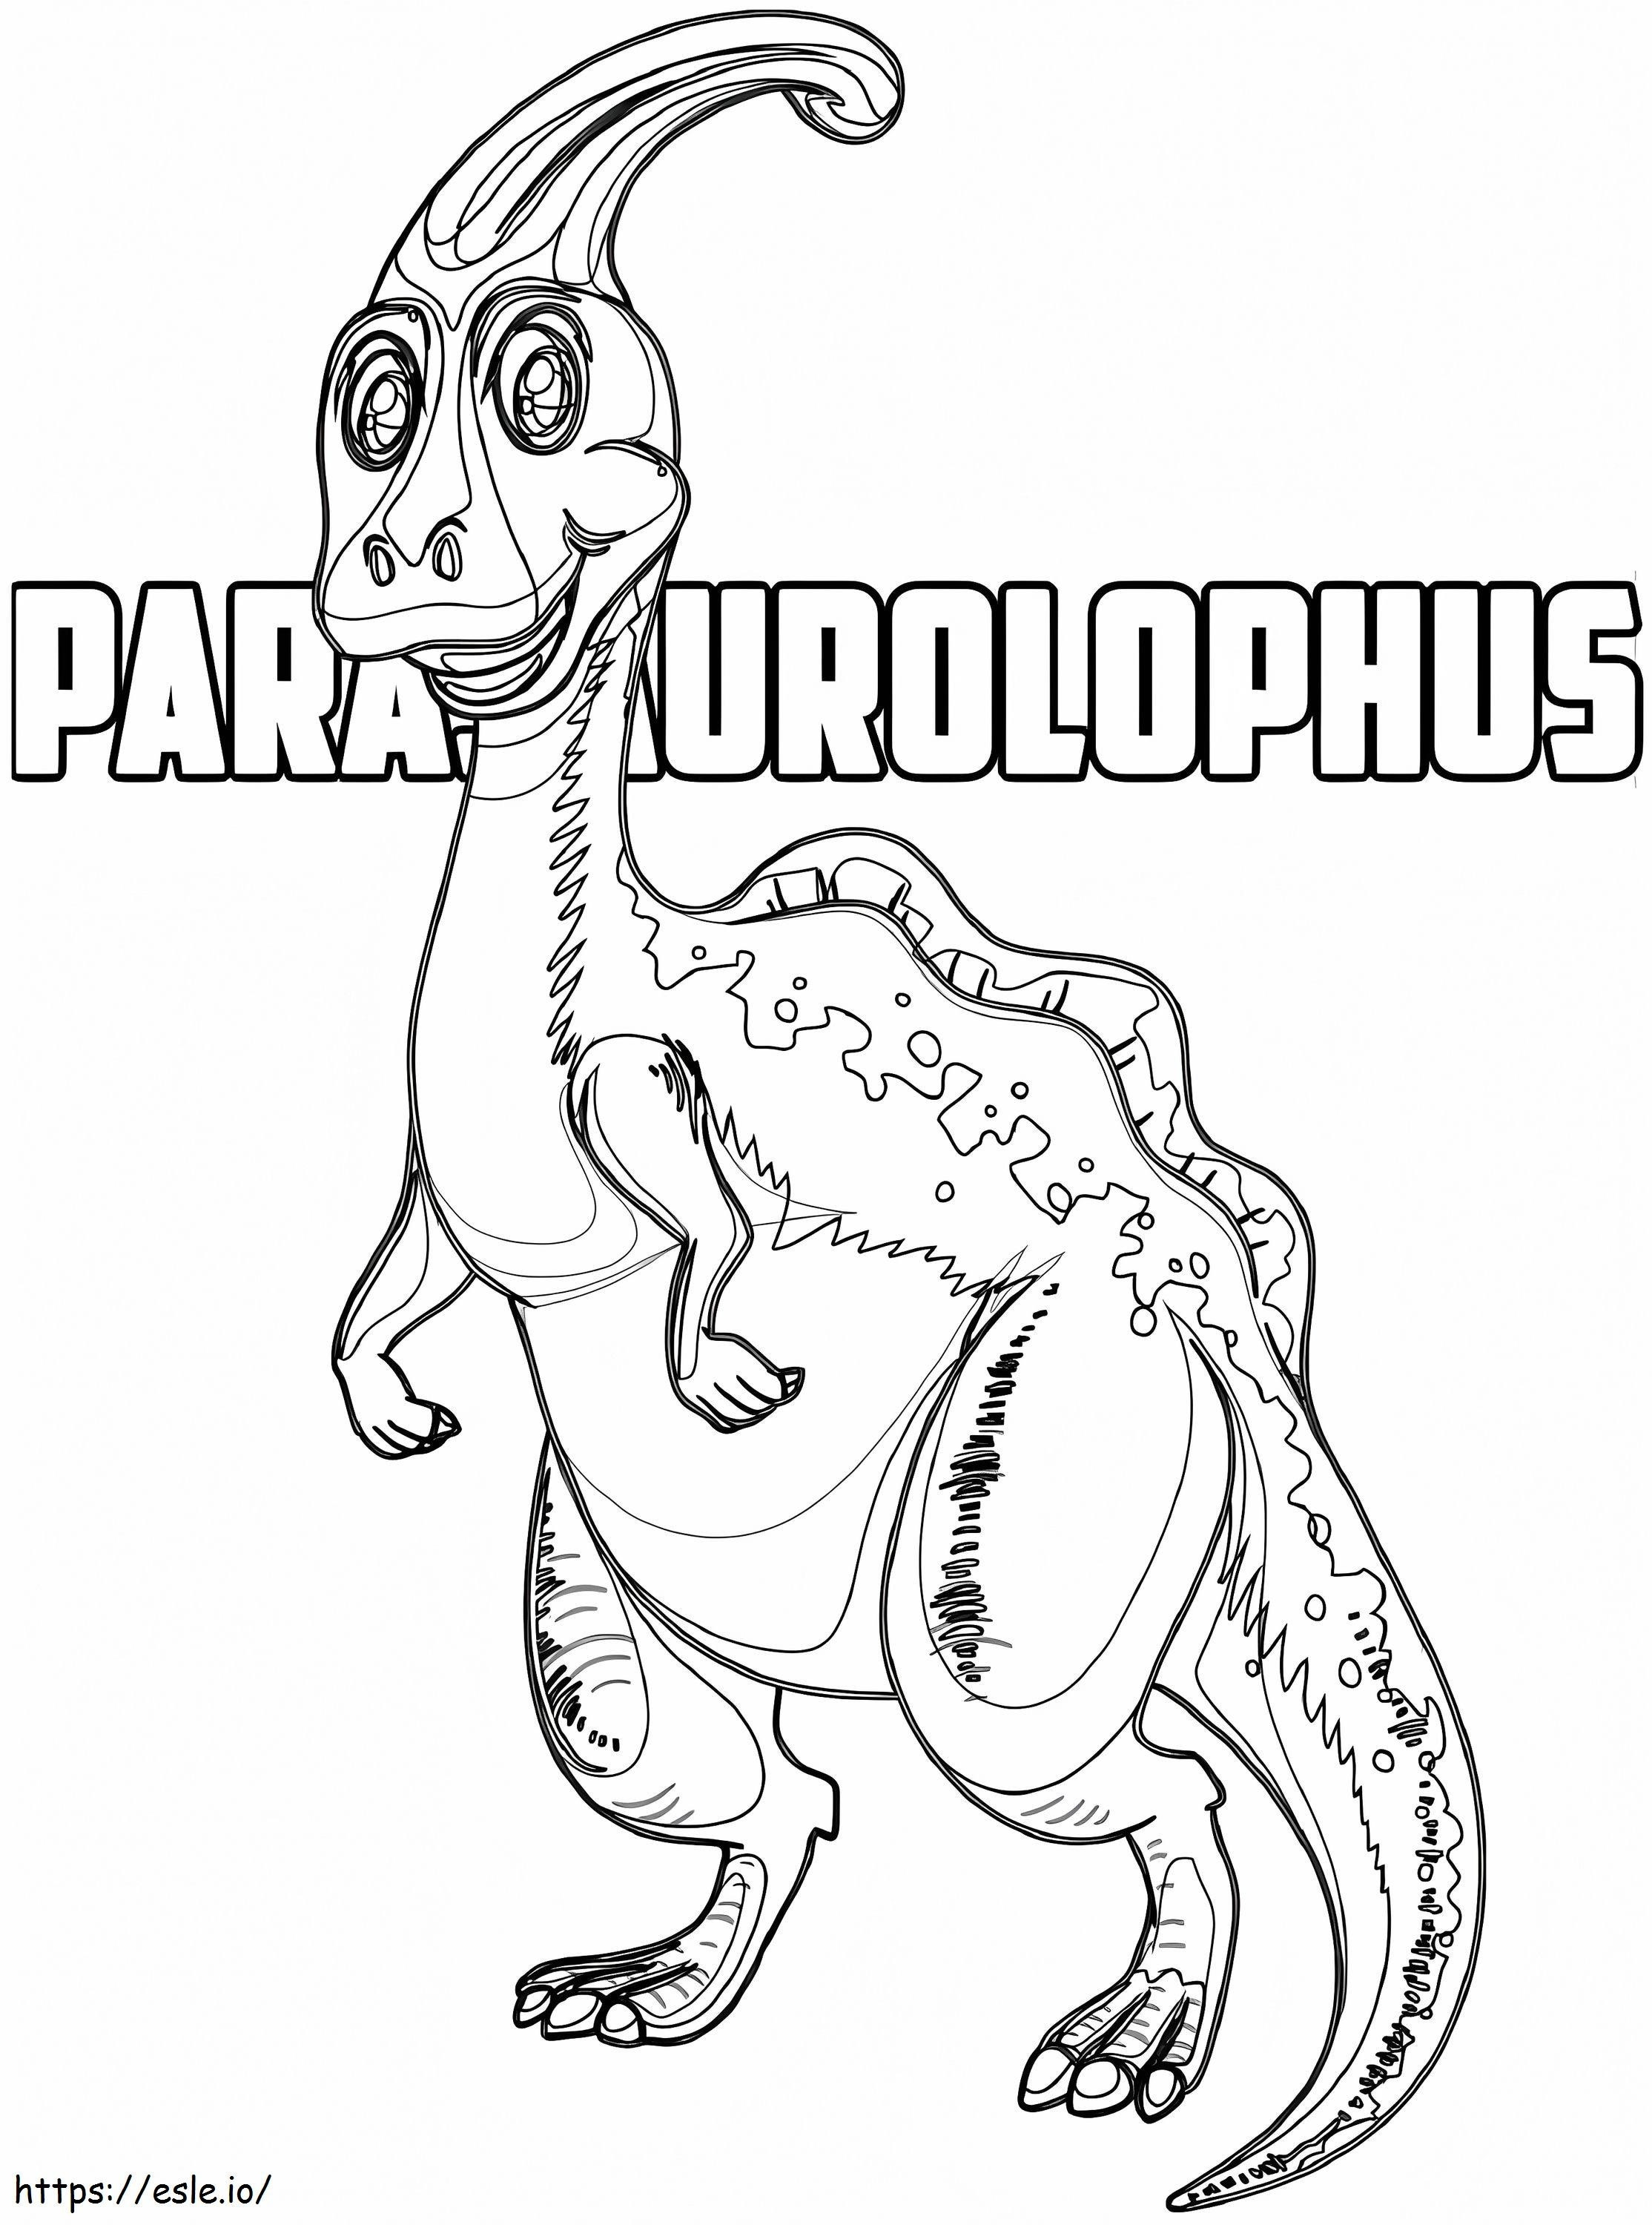 Parasaurolophus 11 coloring page